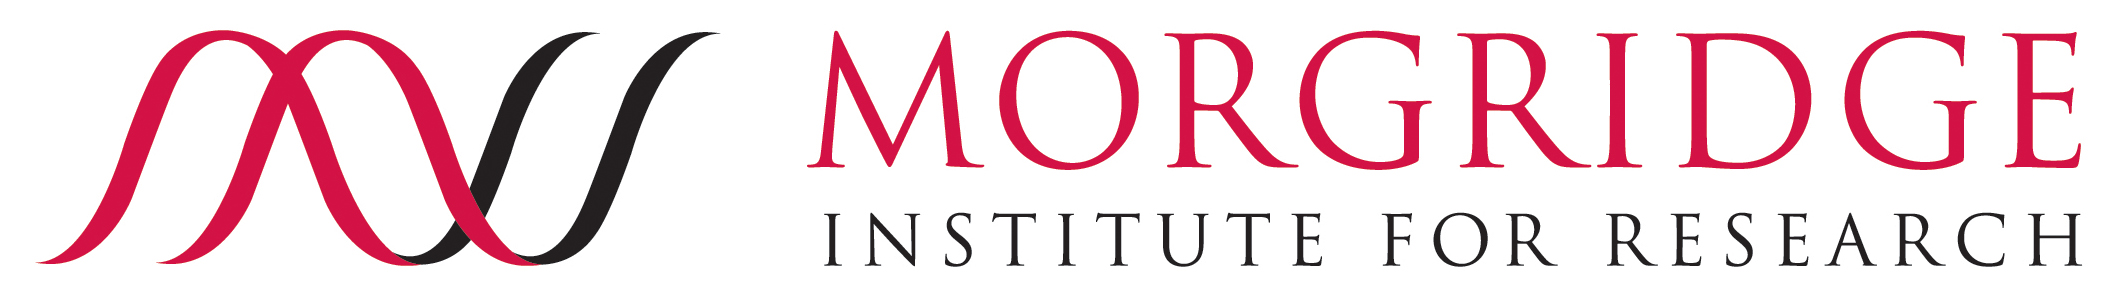 Morgridge Institute for Research